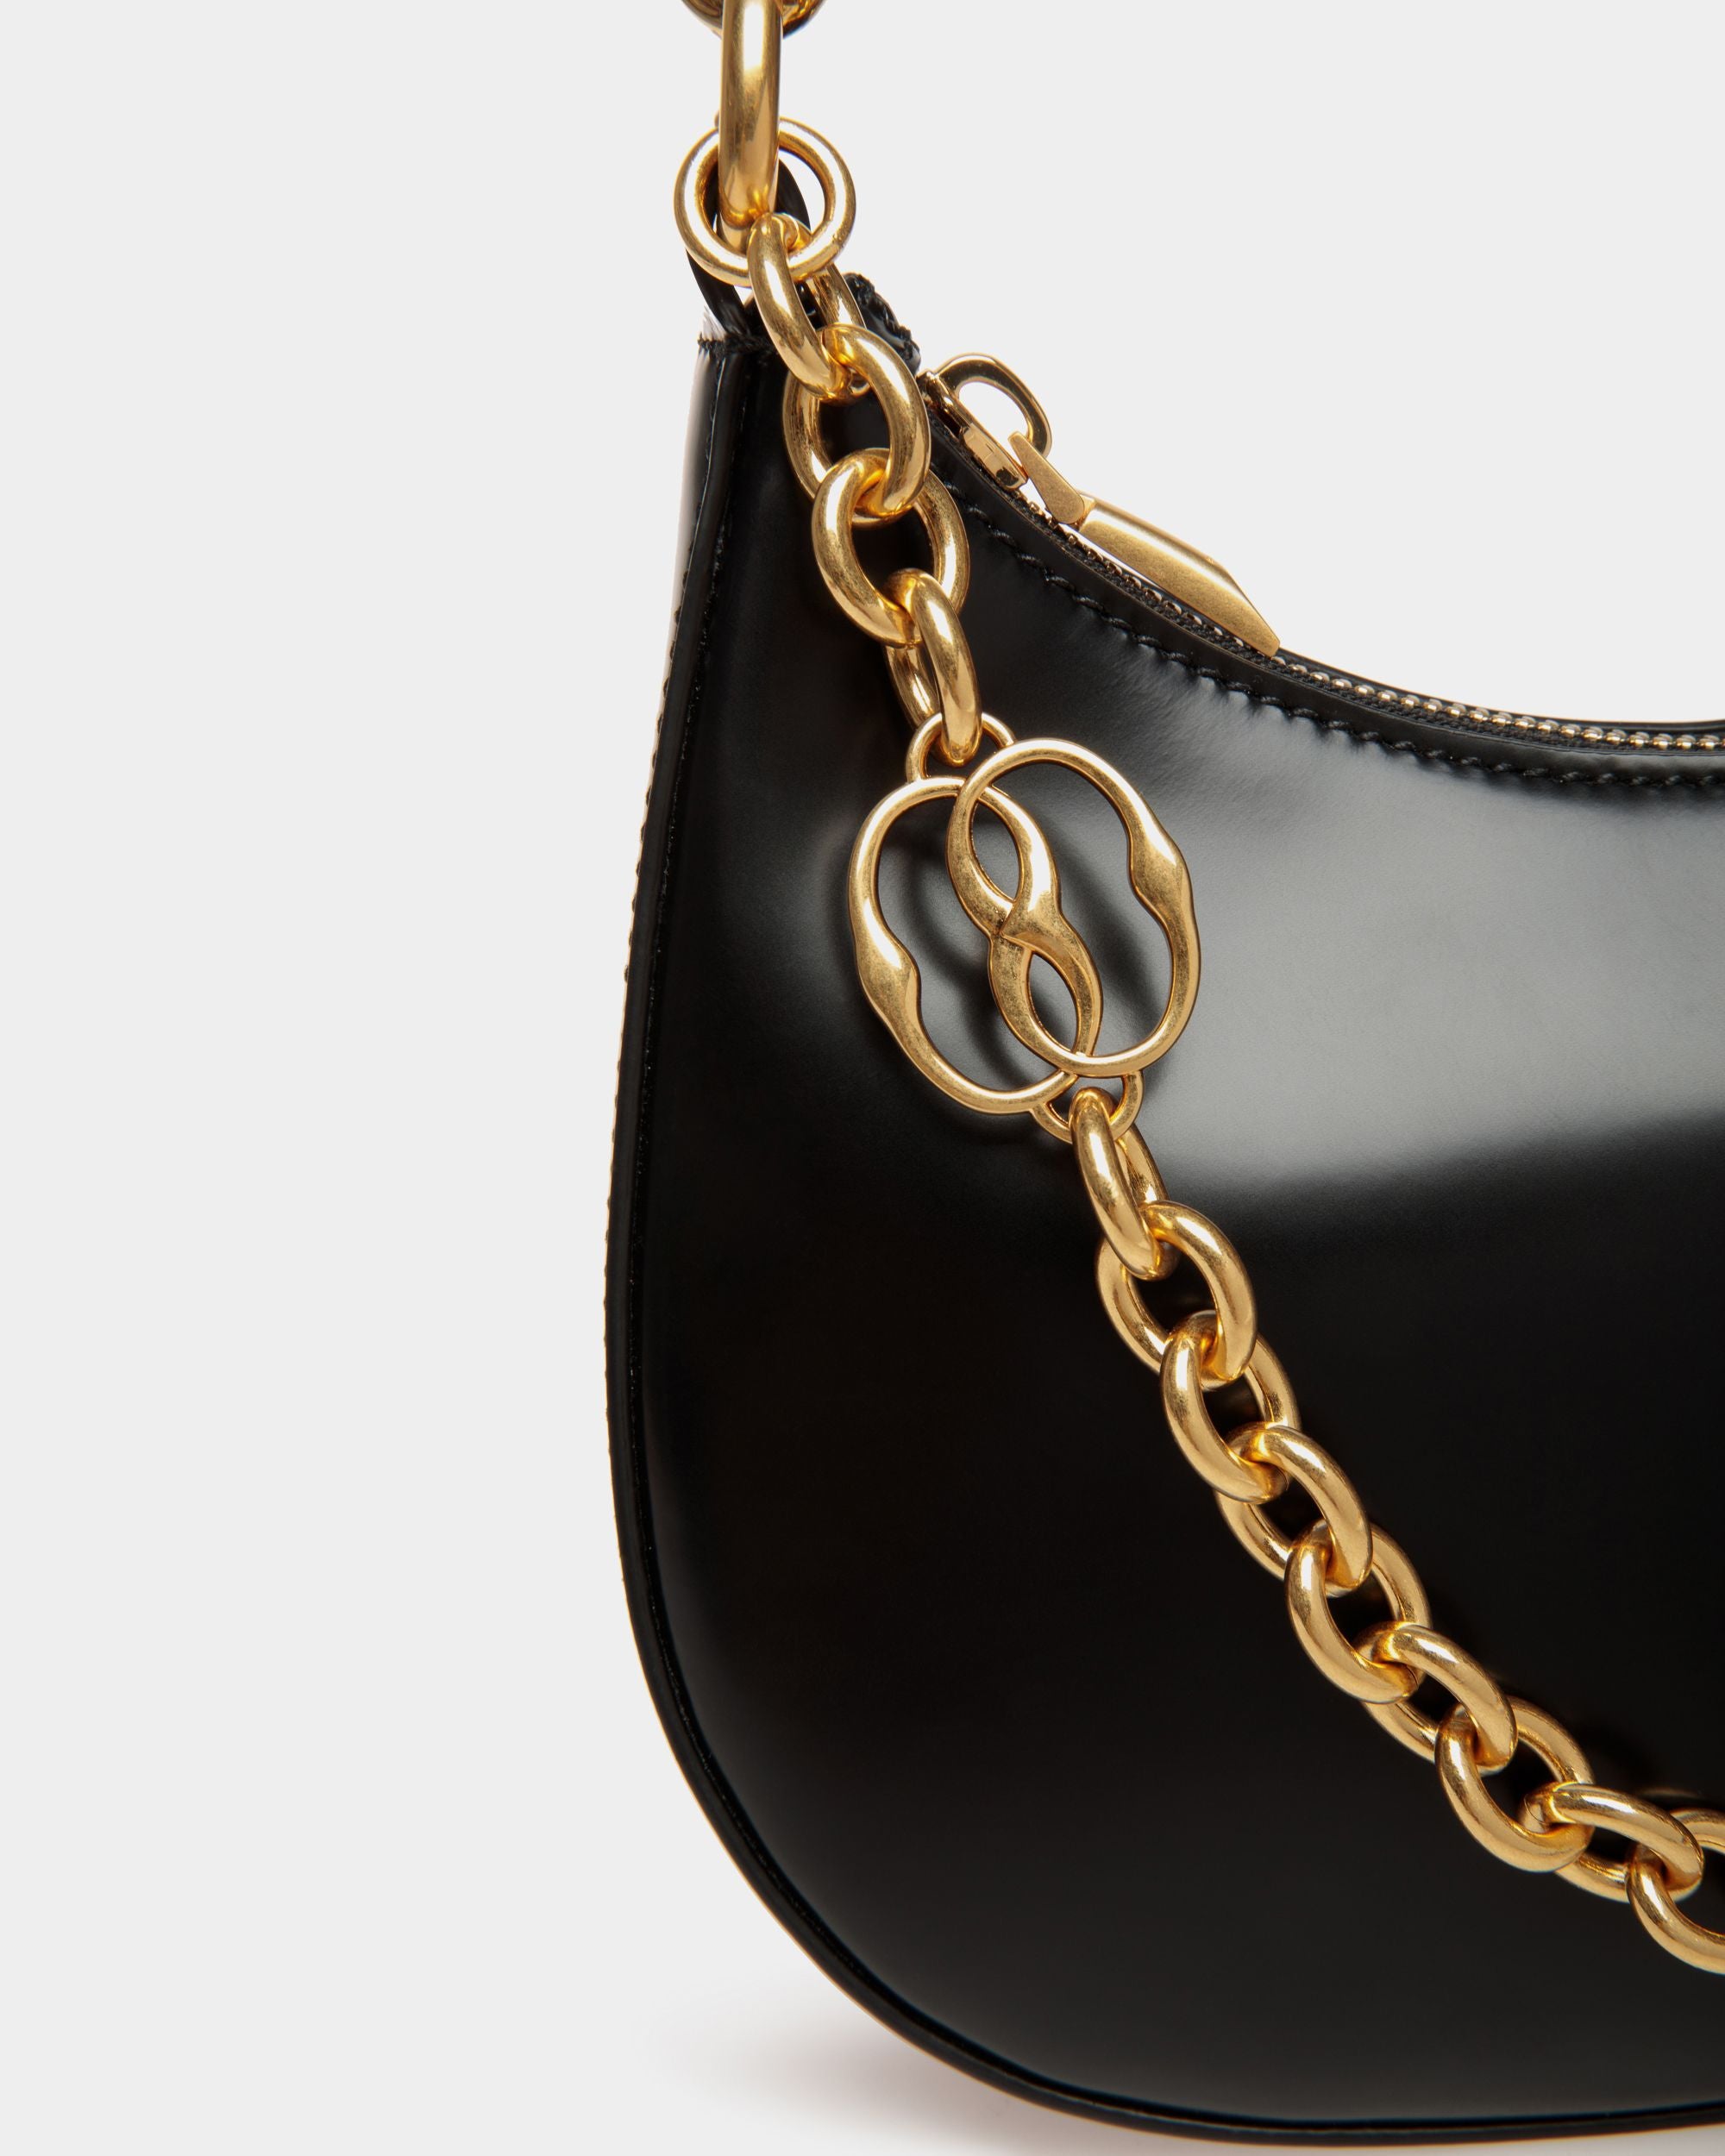 Emblem | Women's Mini Crossbody Bag in Black Brushed Leather | Bally | Still Life Detail